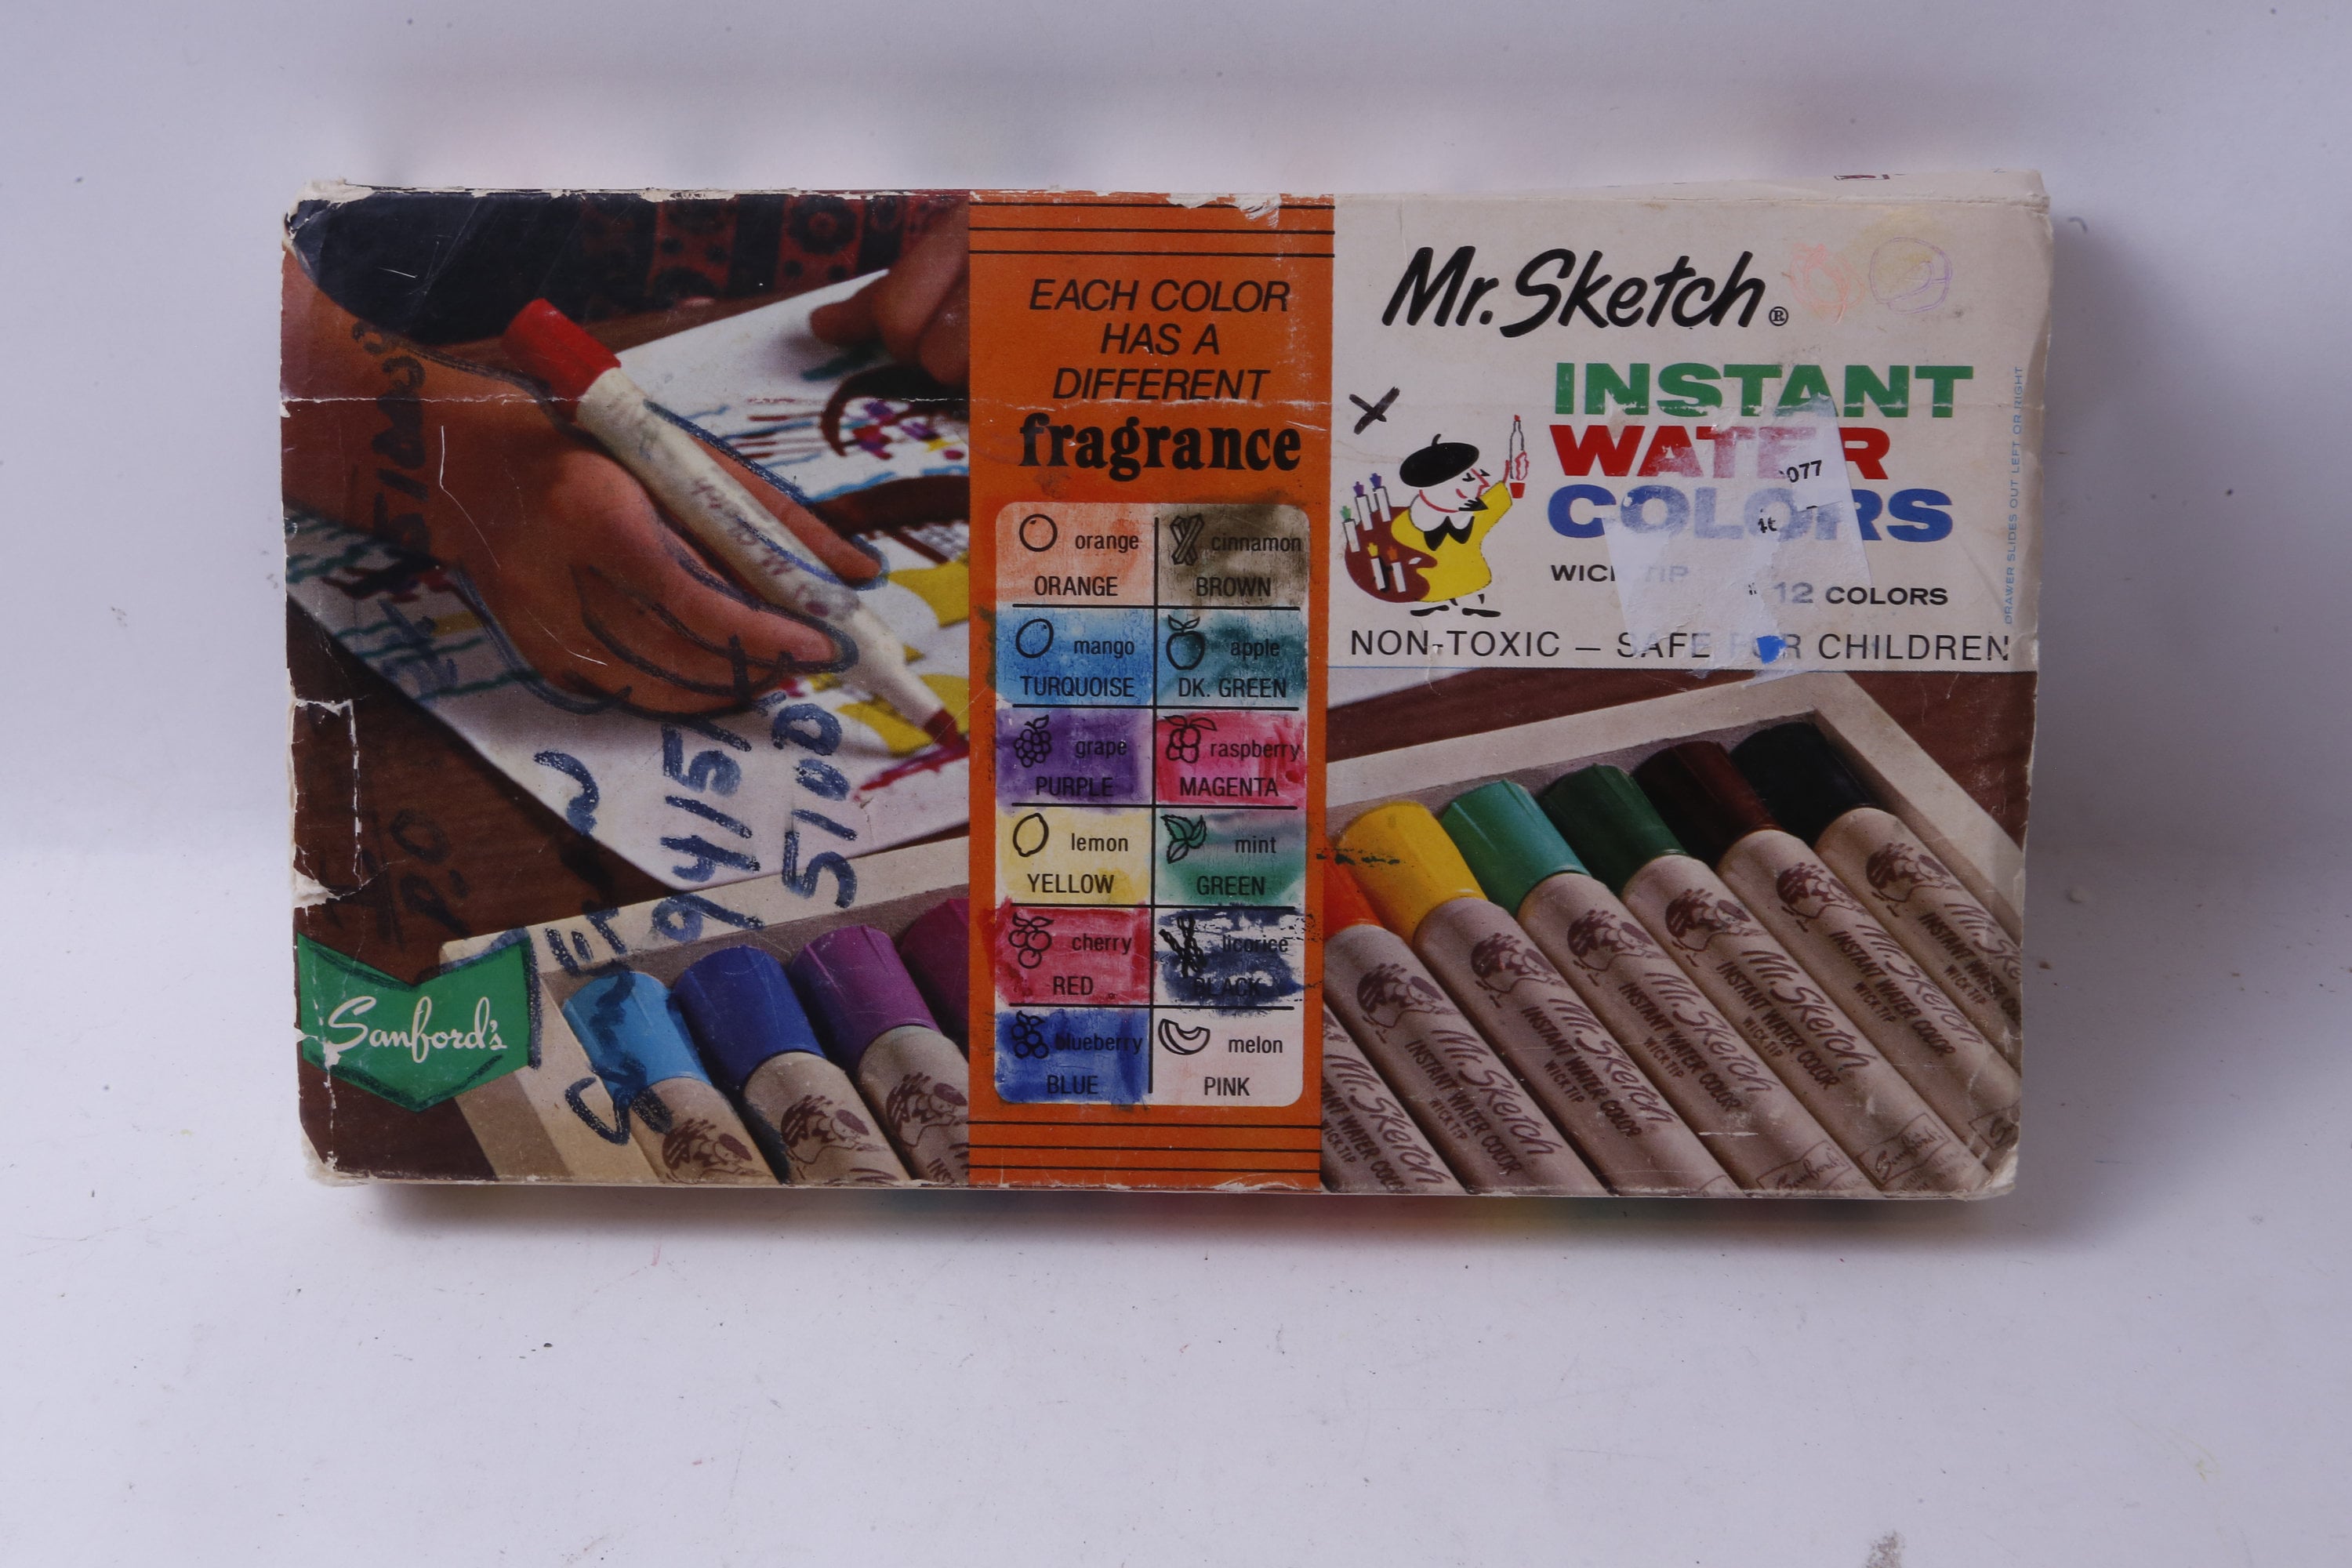 Vintage Mr. Sketch Instant Water Color Markers, Unscented, By Sanford  No.22072